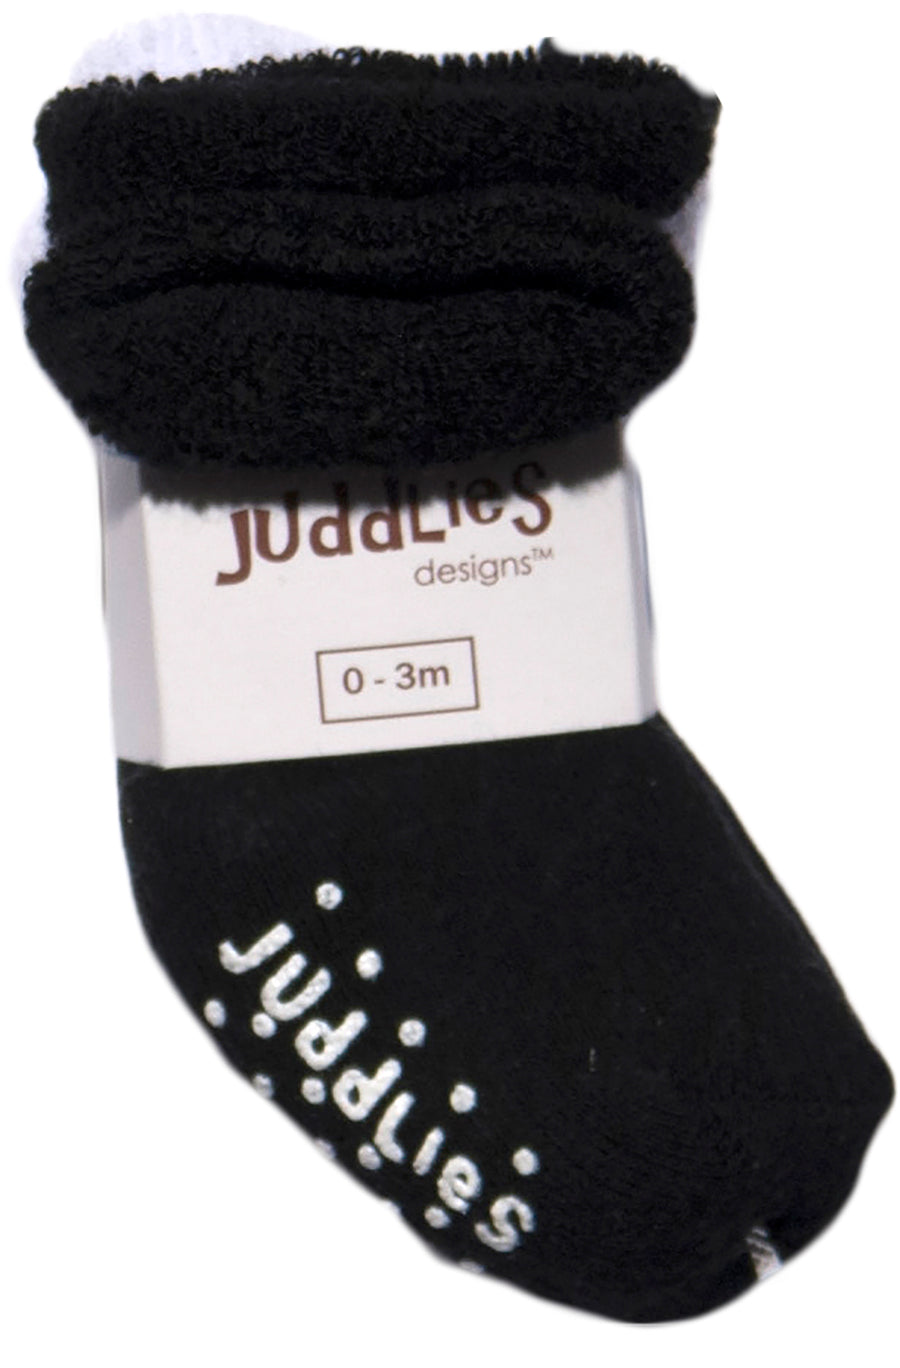 Juddlies - 2pairs Infant Socks - Black + White 2 pack Infant Socks - Black + White 821436005182